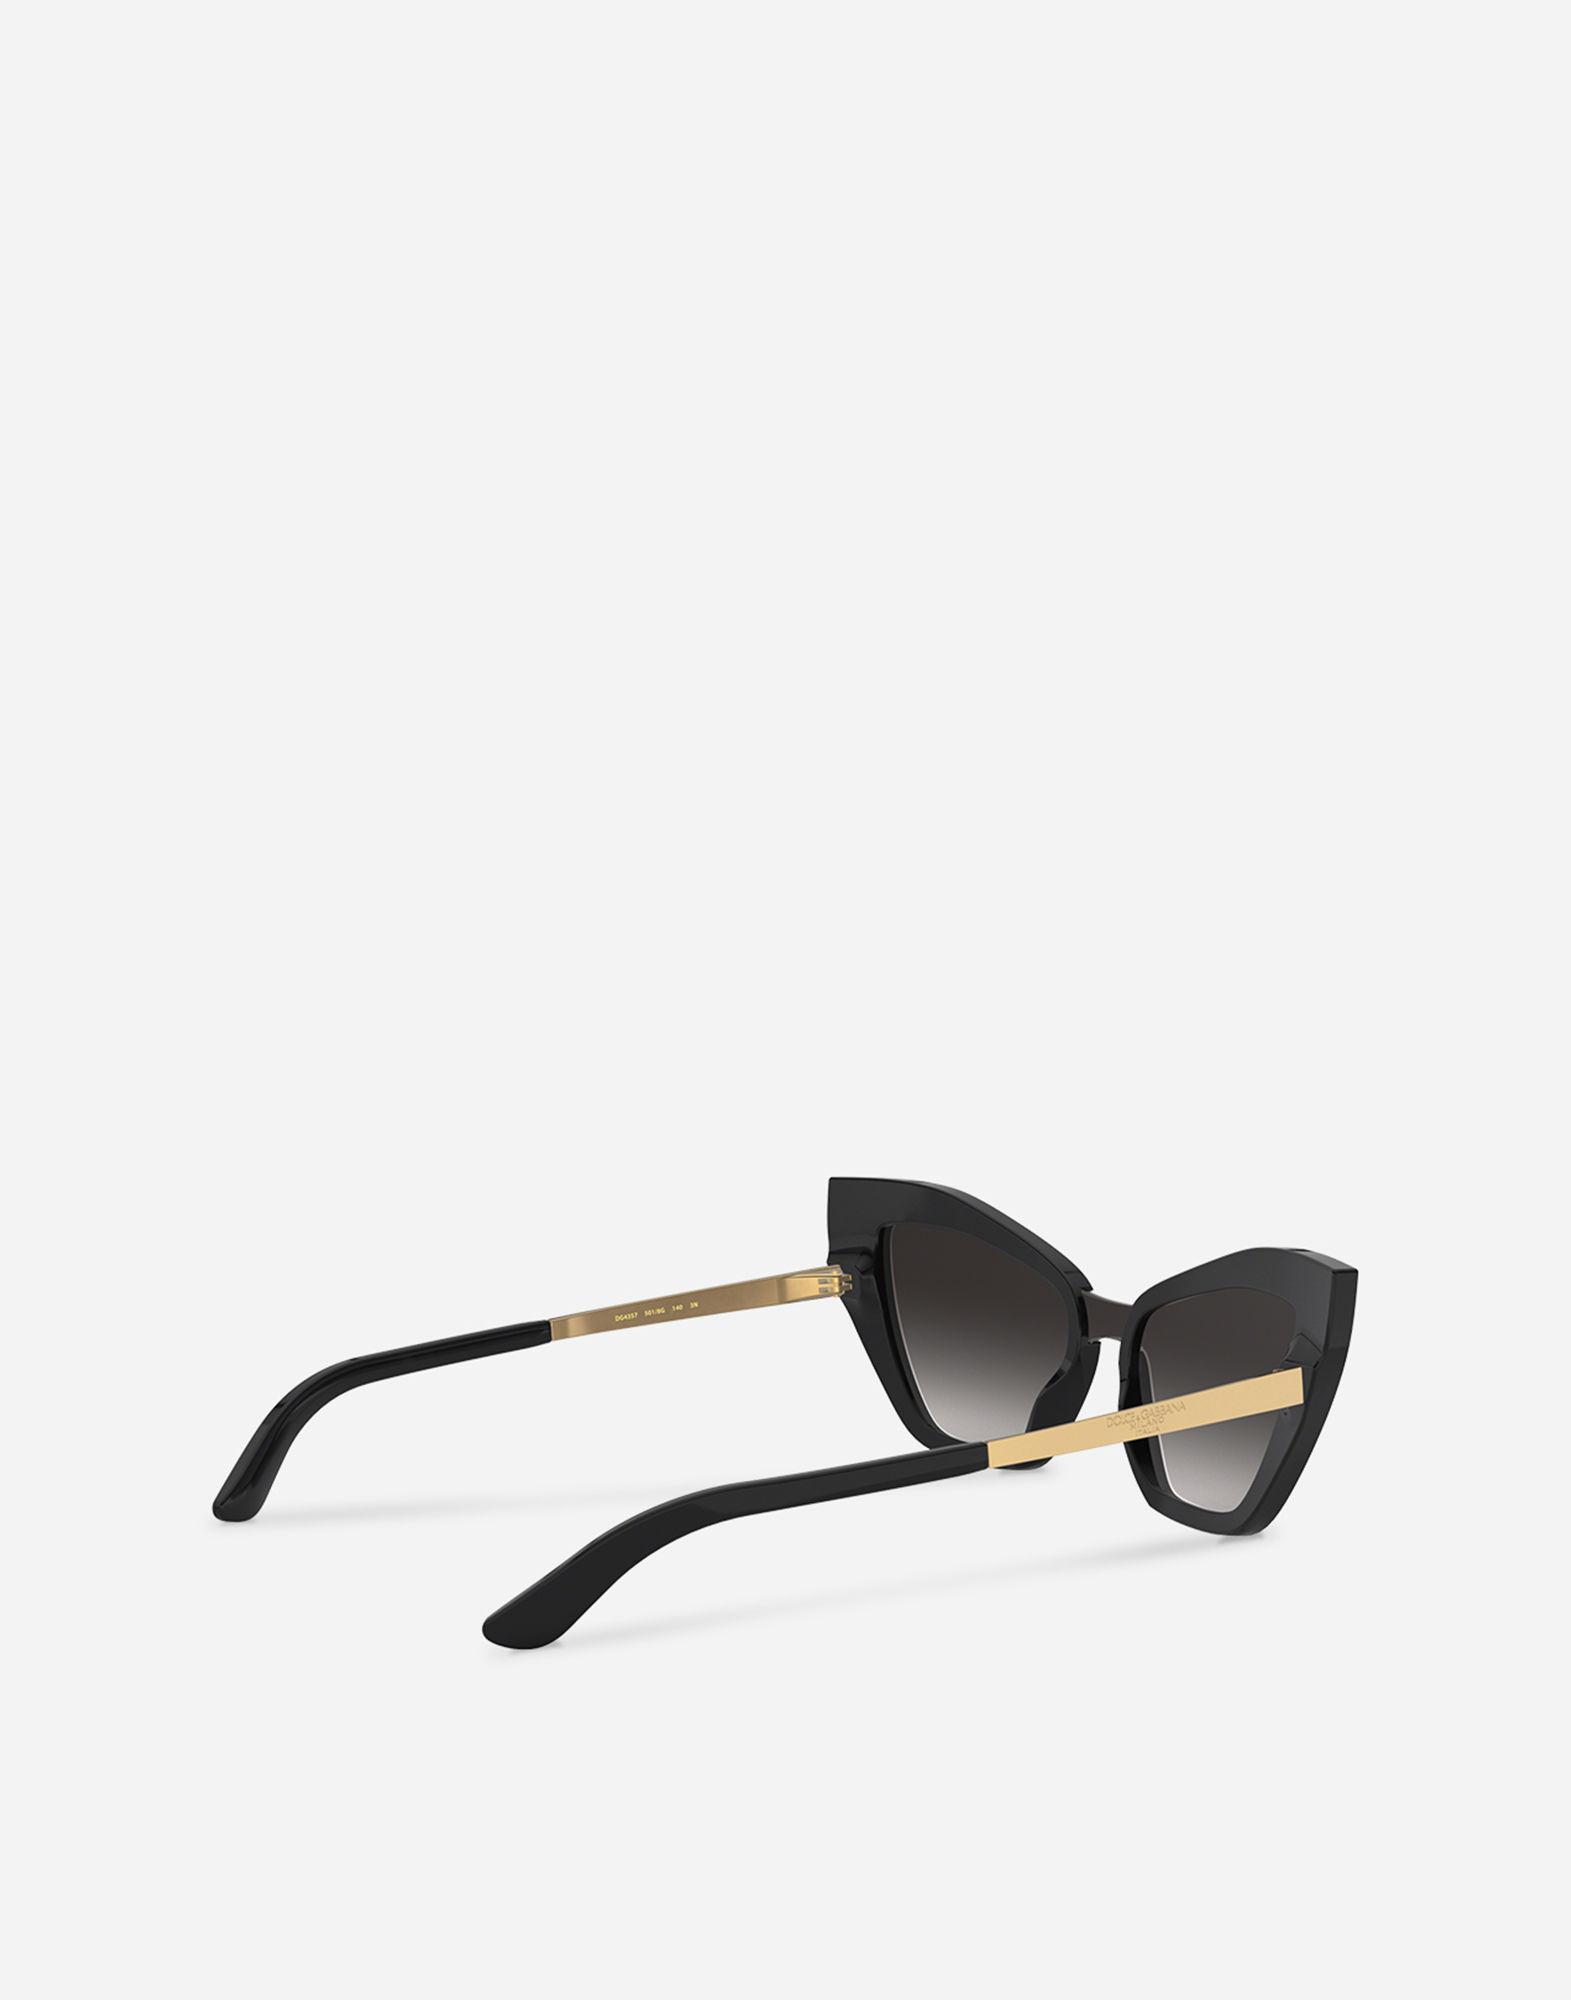 dolce and gabbana print family sunglasses